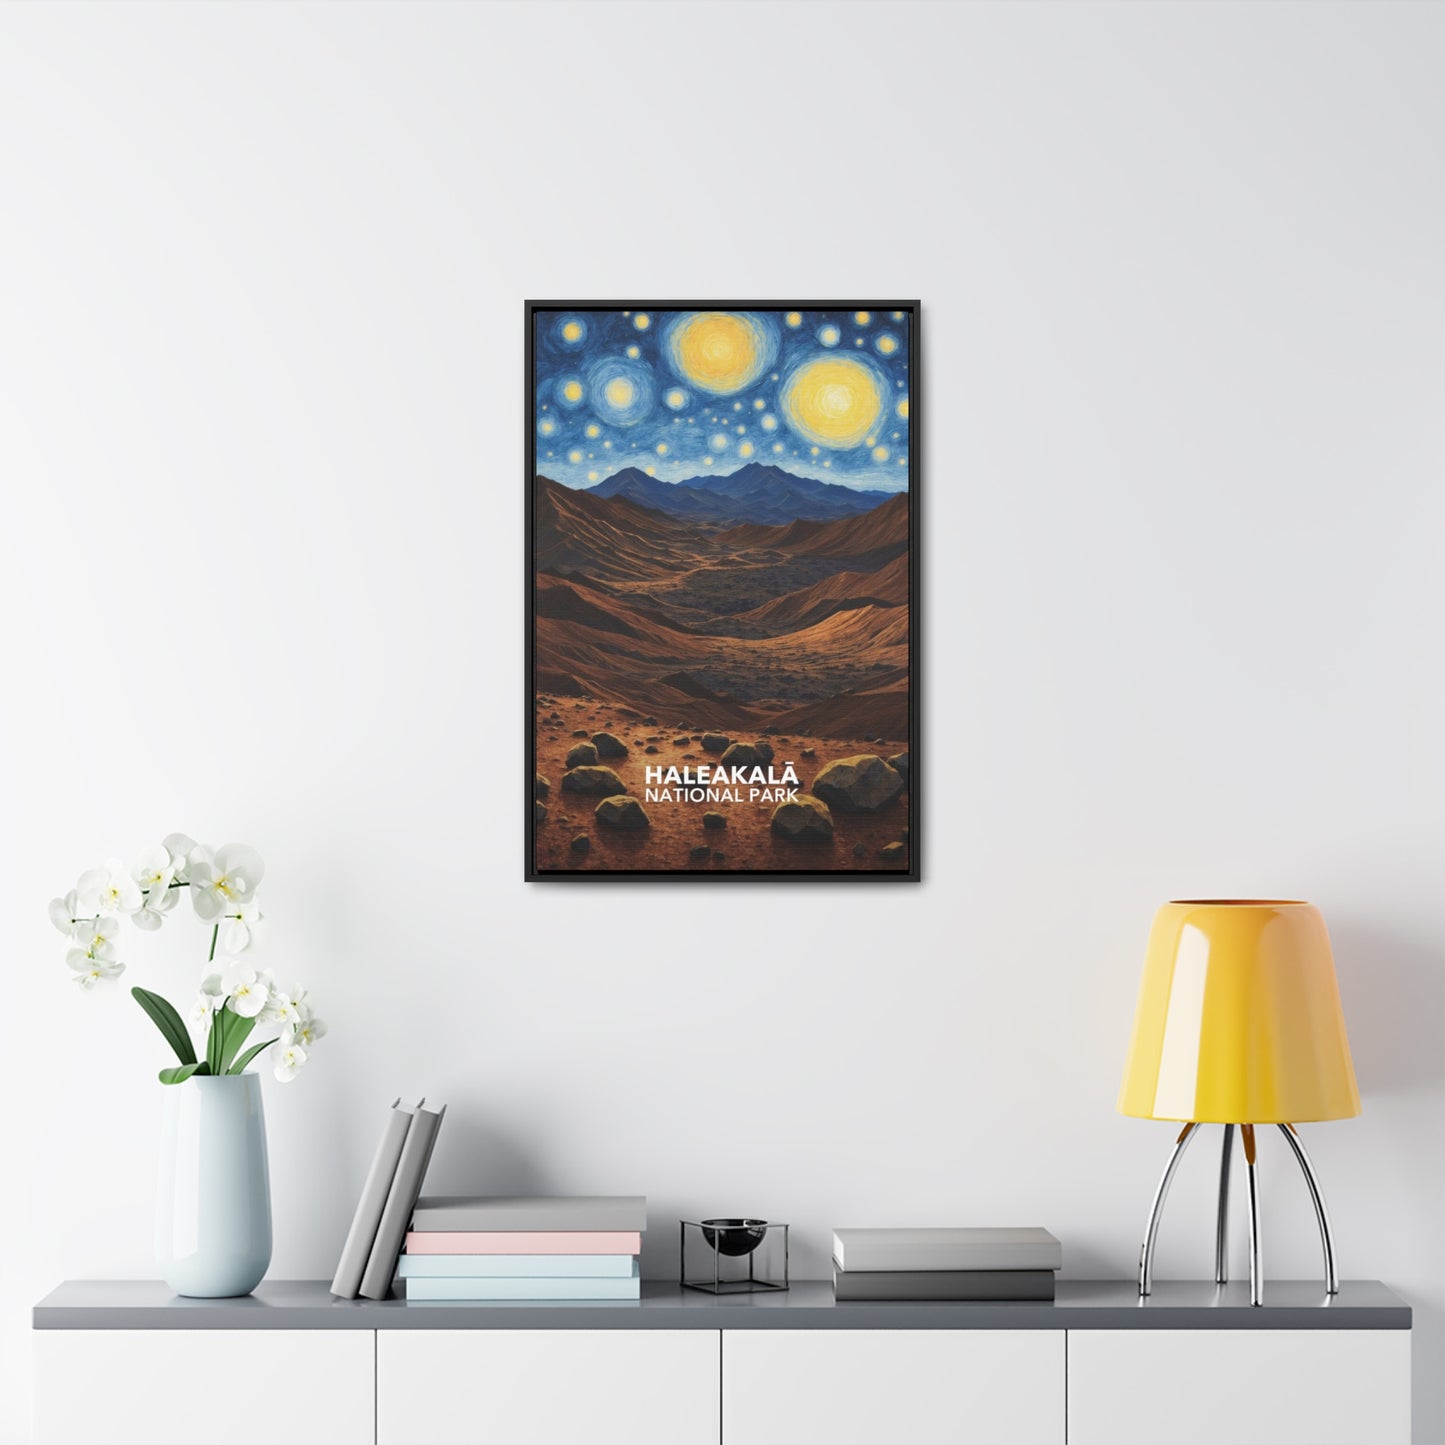 Haleakala National Park Framed Canvas - The Starry Night